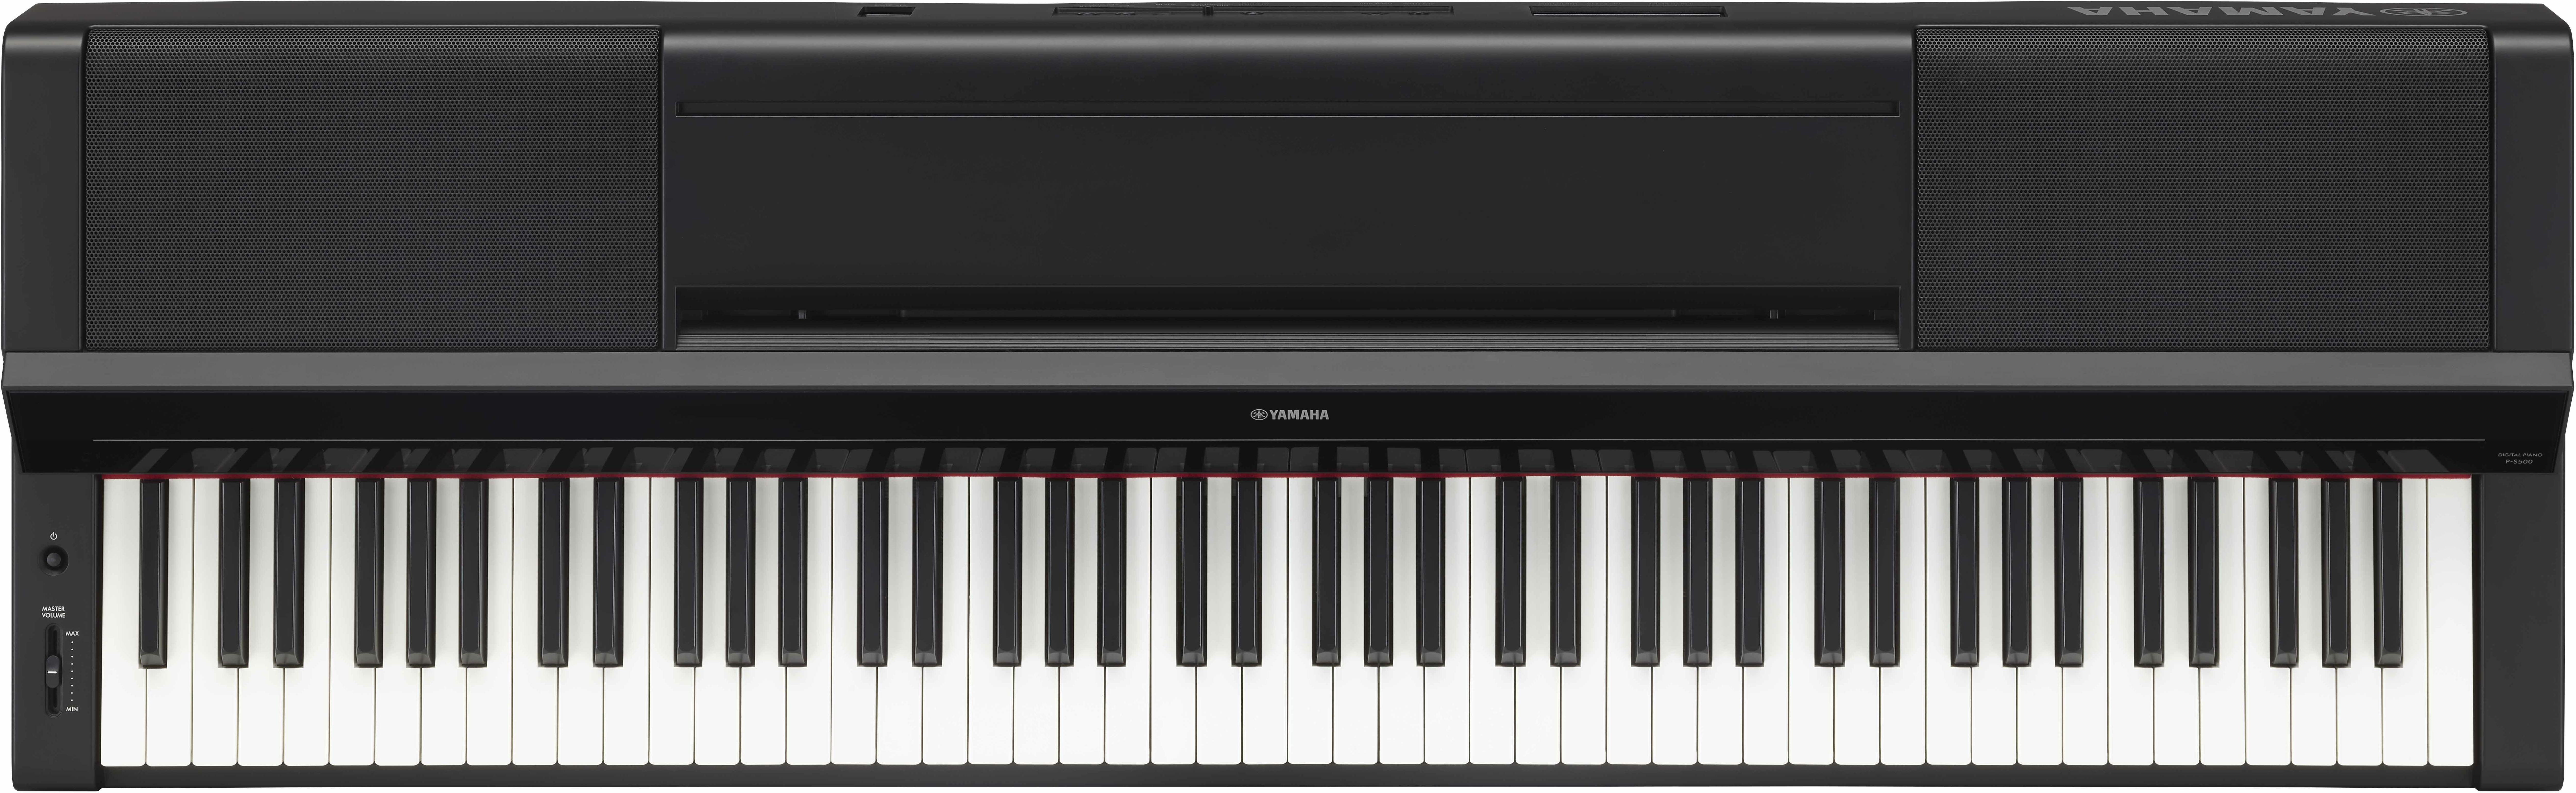 Yamaha P-s500 B - Piano digital portatil - Main picture